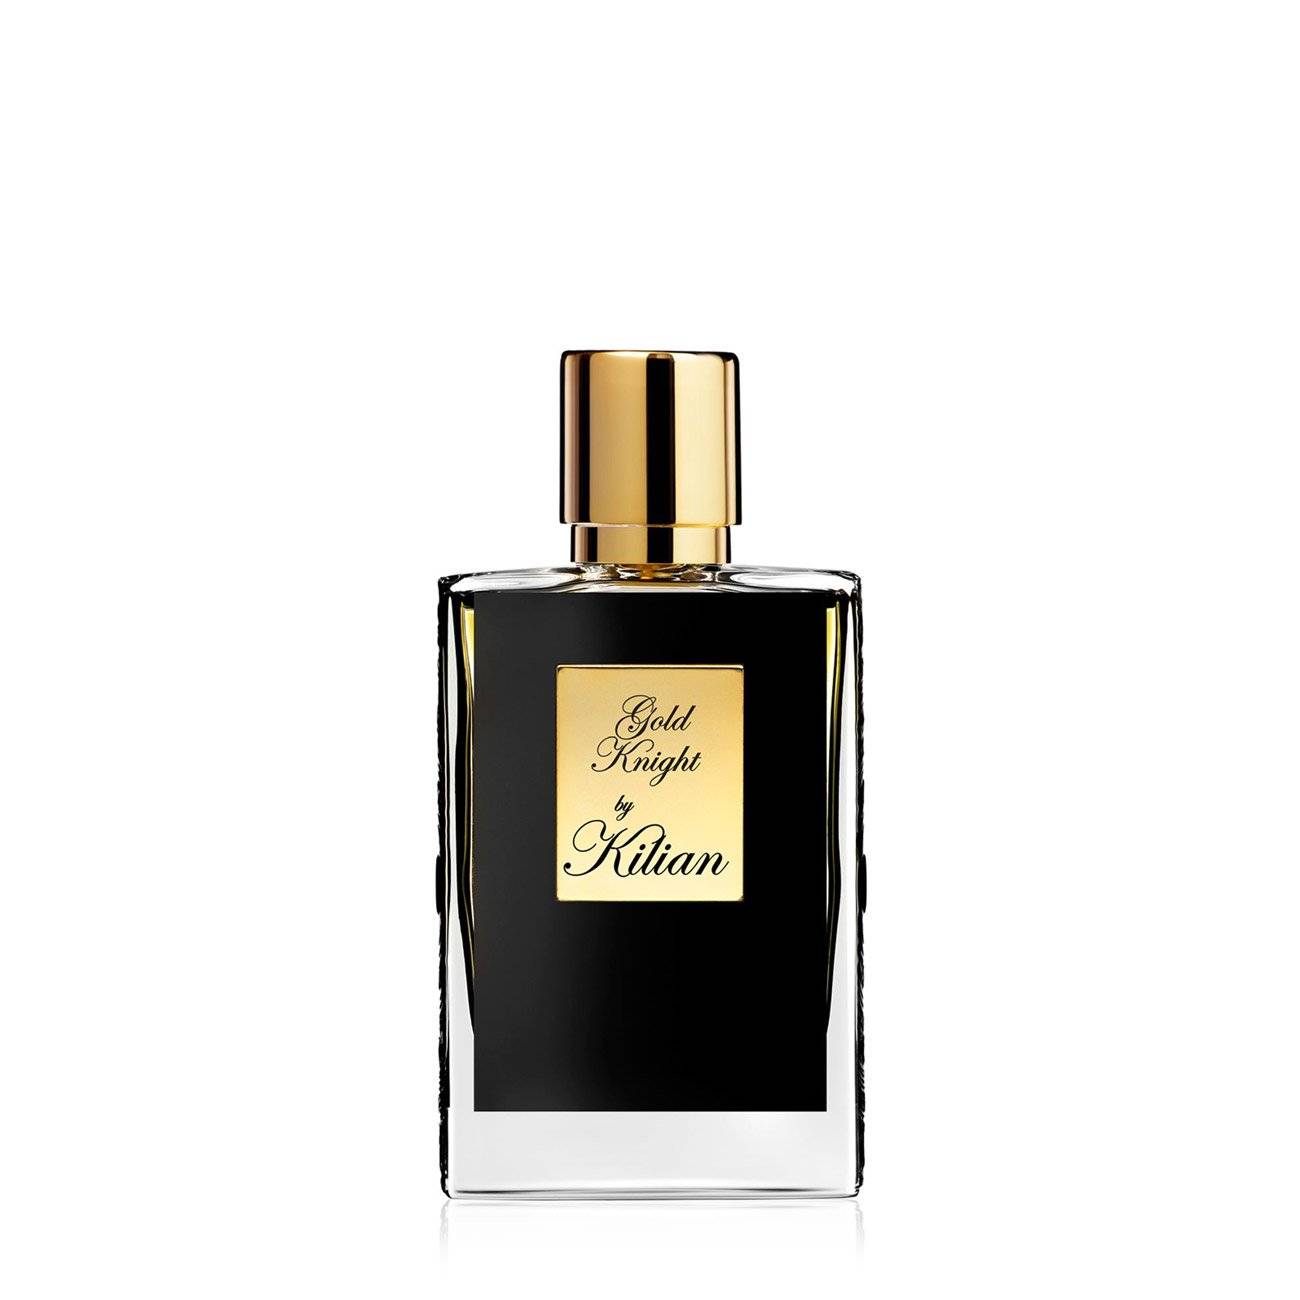 Parfum de niche Kilian GOLD KNIGHT WITH COFFRET 50ml cu comanda online